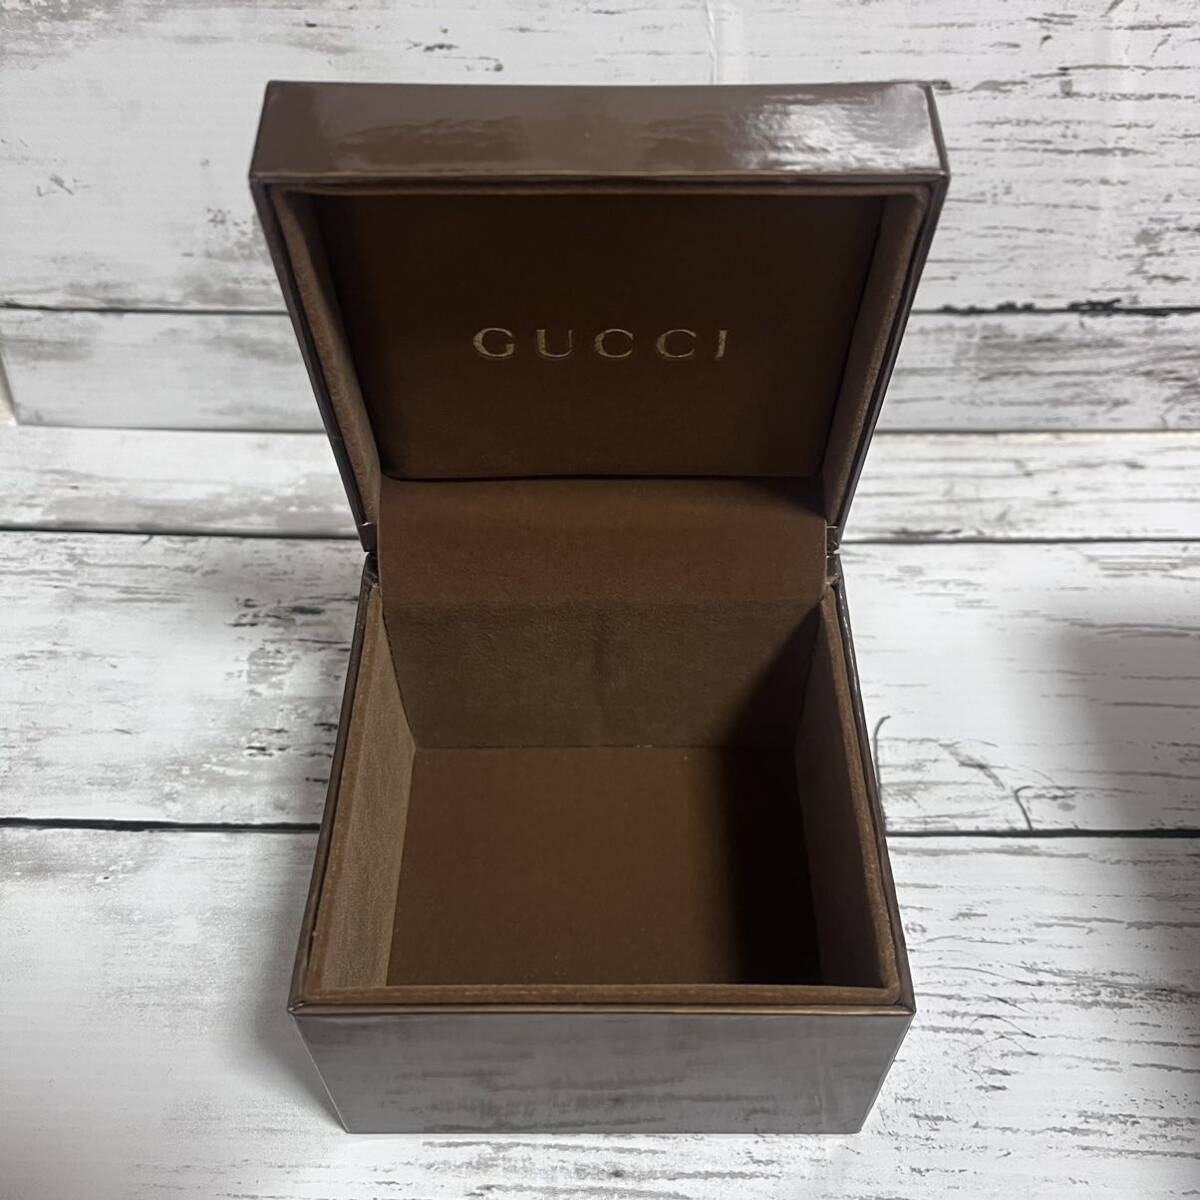  Gucci наручные часы пустой коробка GUCCI box бренд BOX несессер место хранения интерьер 